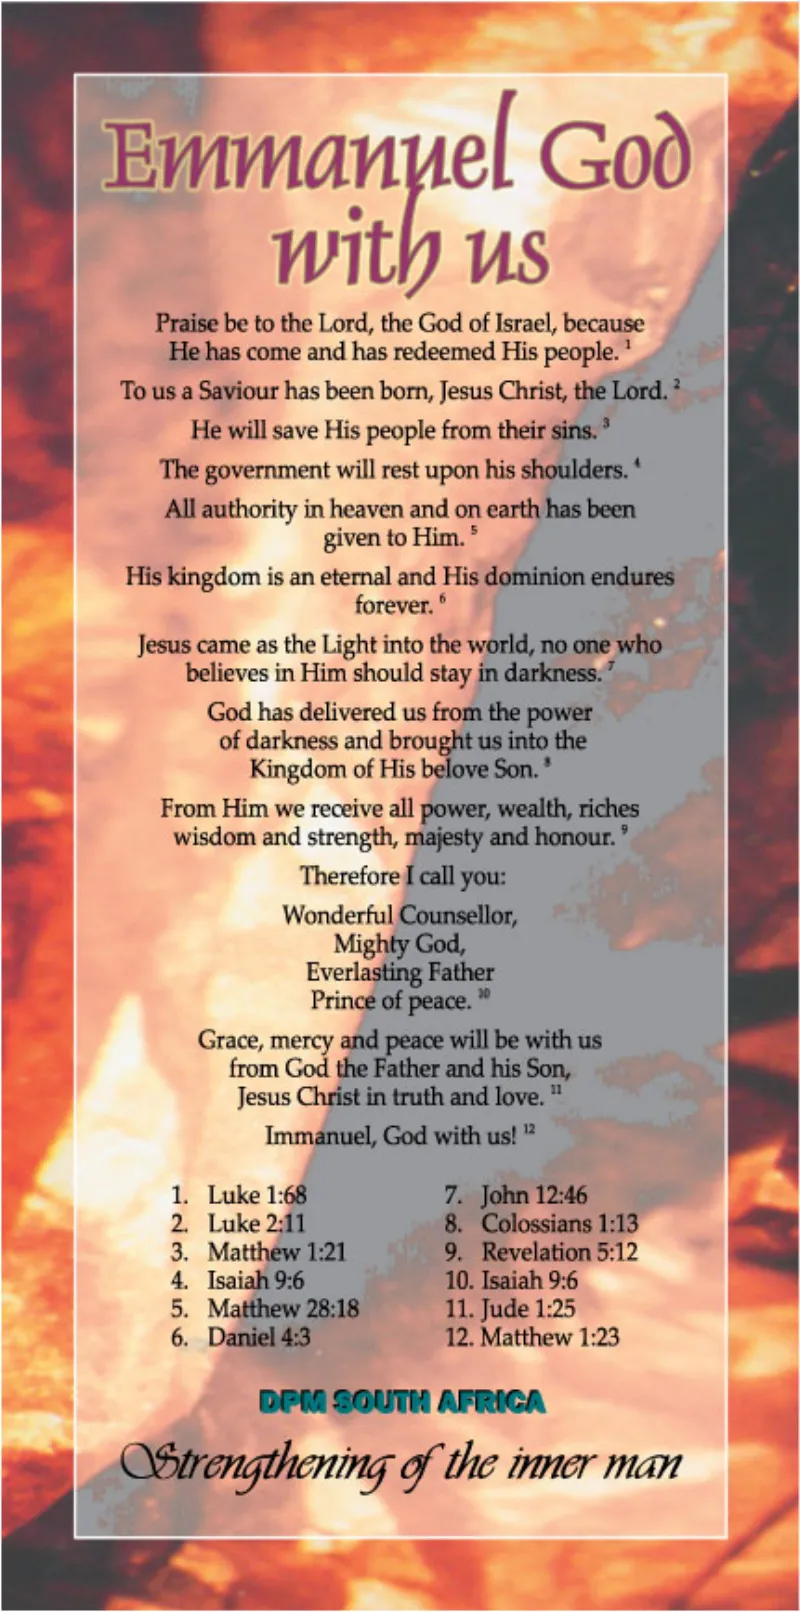 Proclamation - Emmanuel God with us